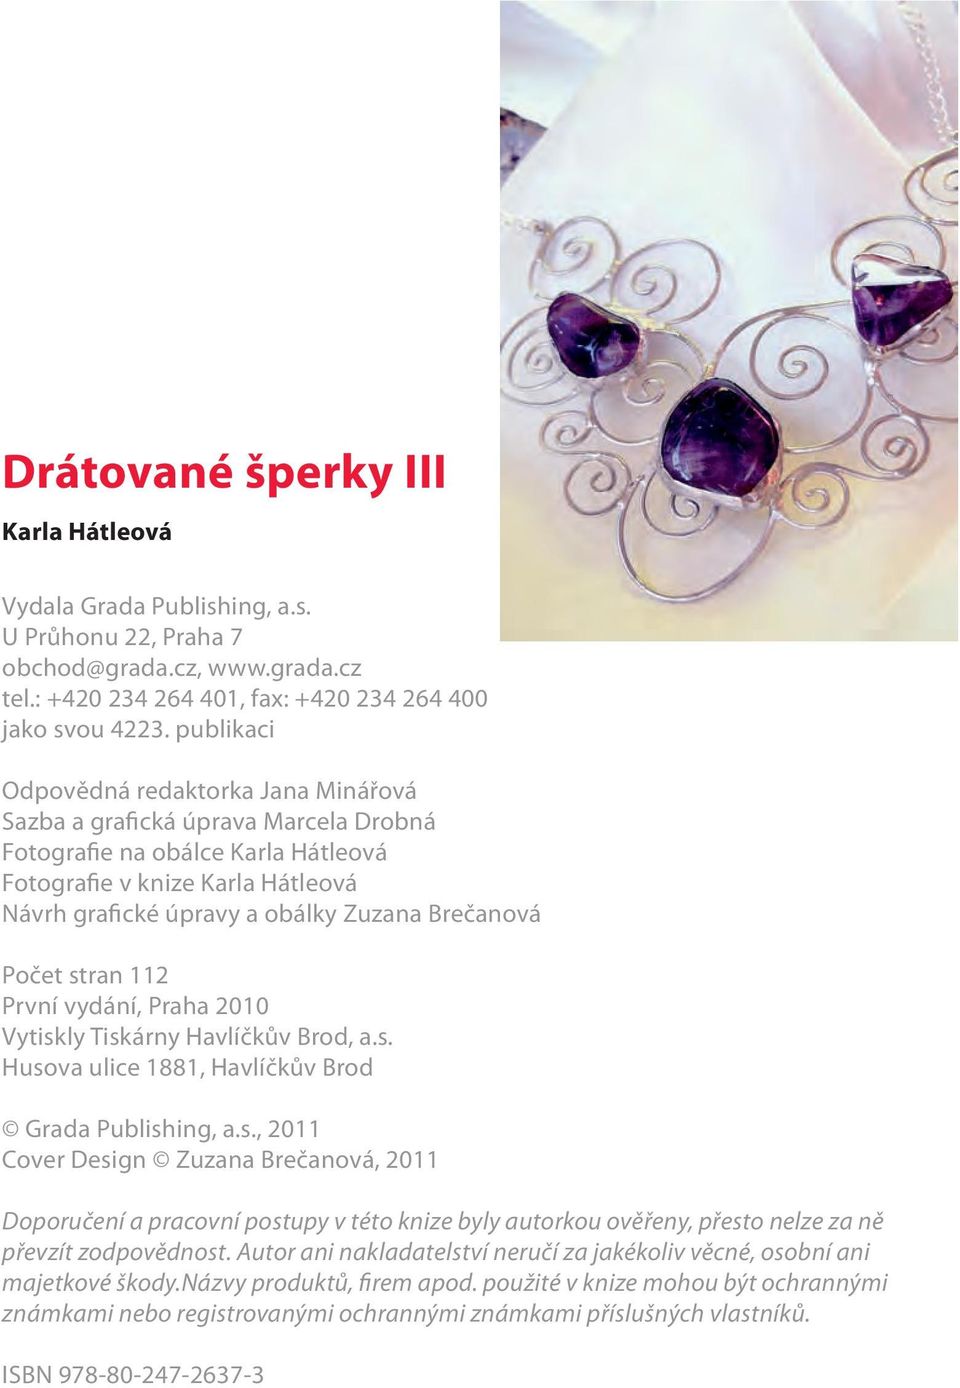 Drátované šperky III. Karla Hátleová - PDF Free Download